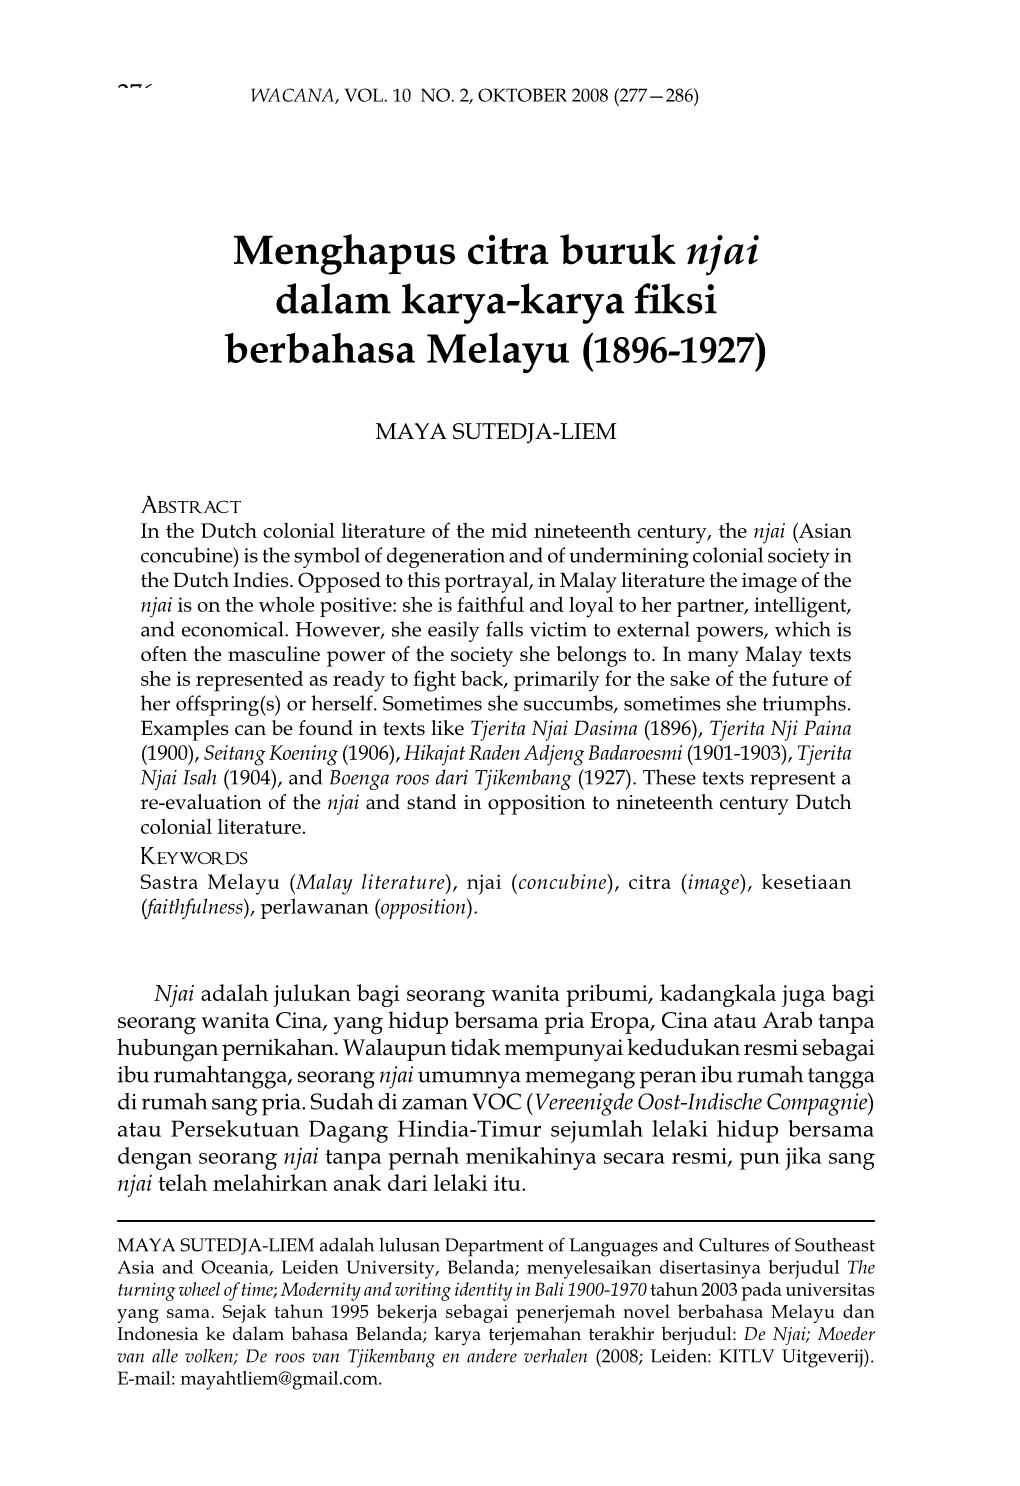 Menghapus Citra Buruk Njai Dalam Karya-Karya Fiksi Berbahasa Melayu (1896-1927)